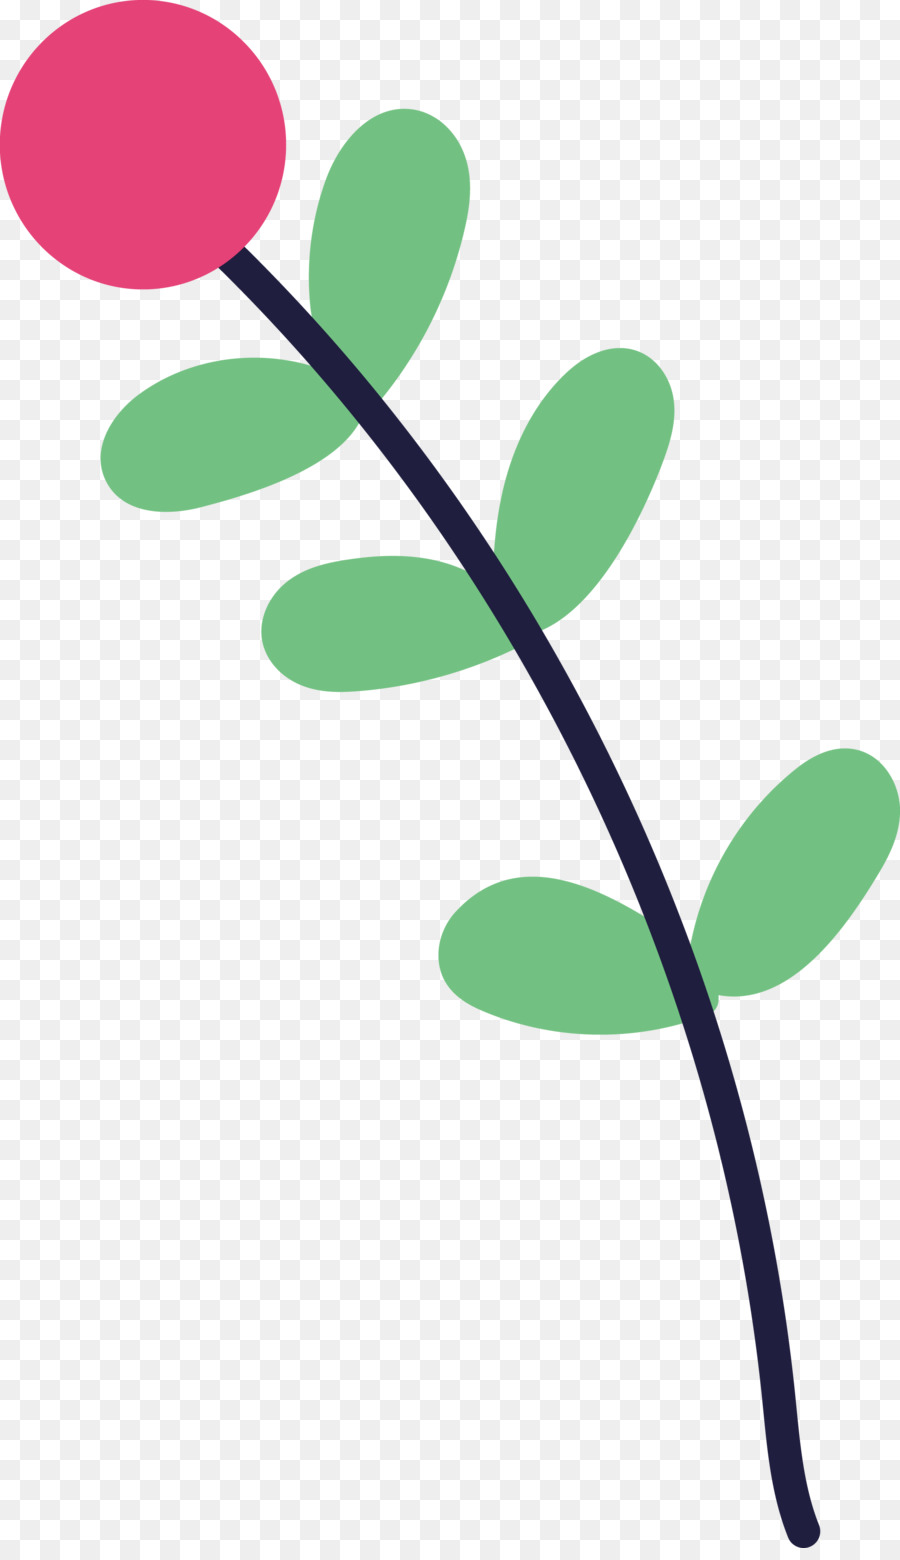 leaf plant stem branch green flower